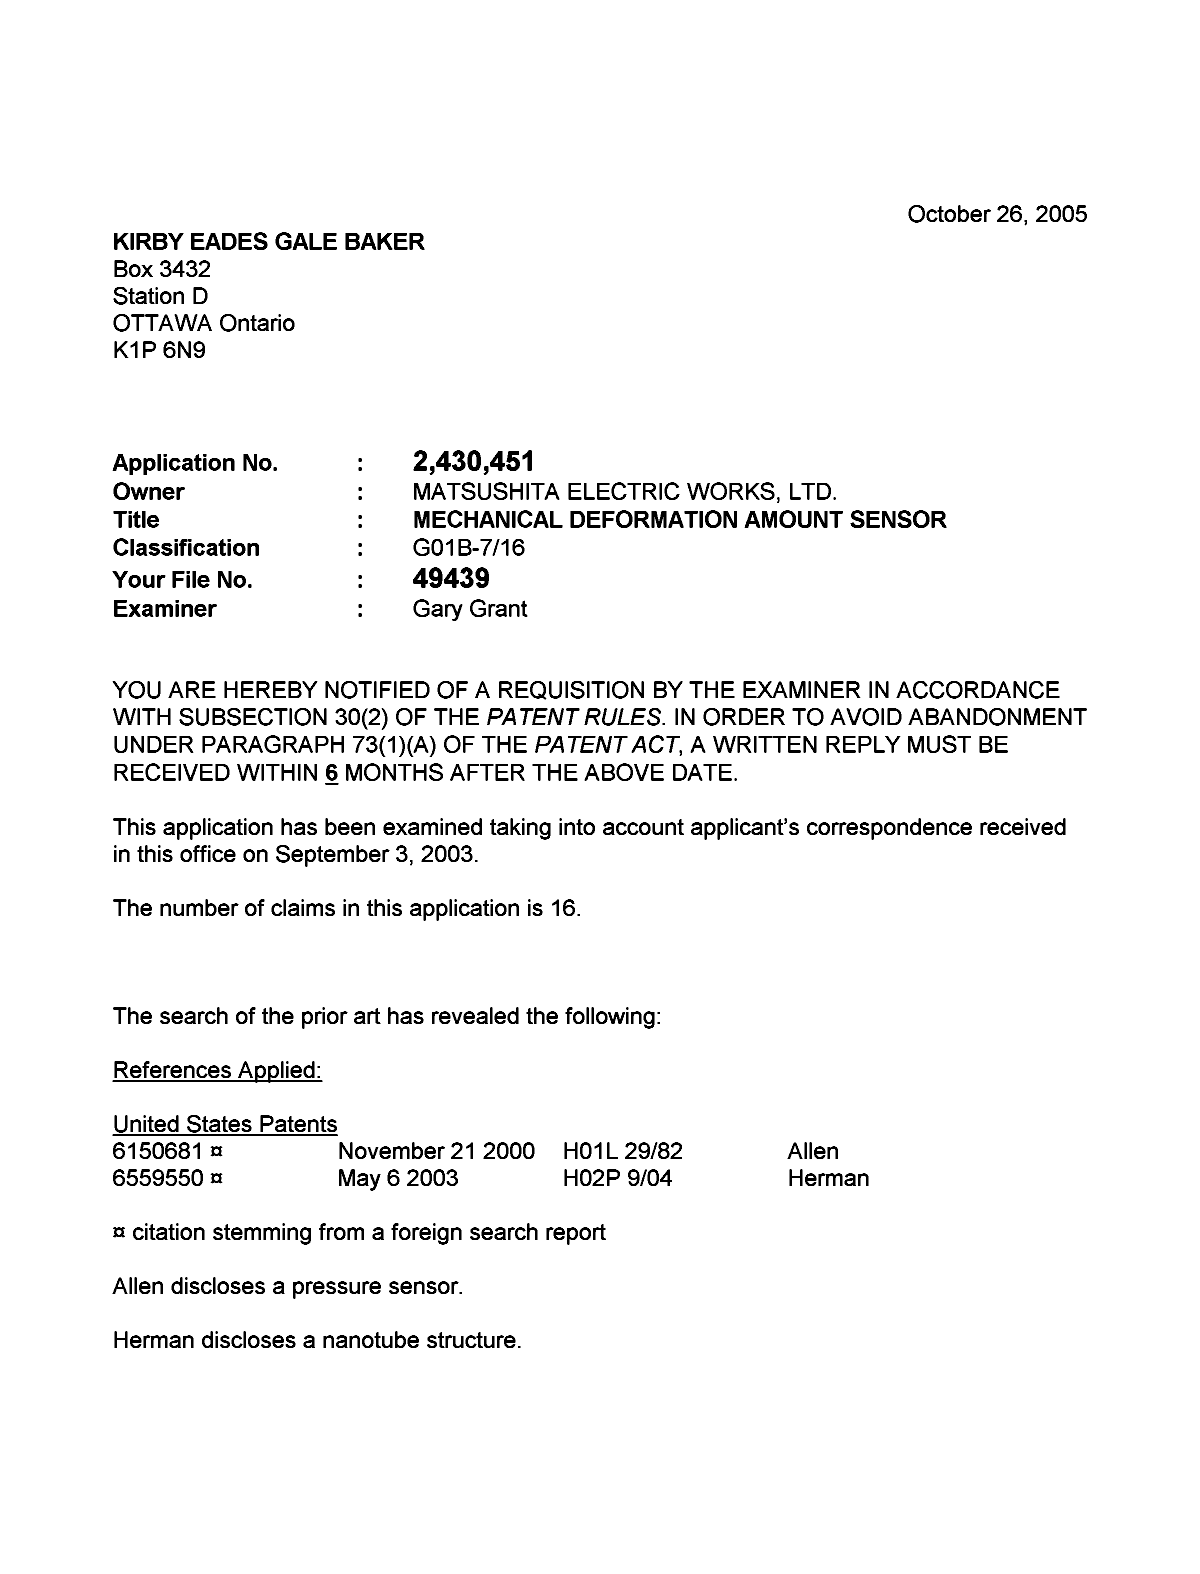 Canadian Patent Document 2430451. Prosecution-Amendment 20051026. Image 1 of 3